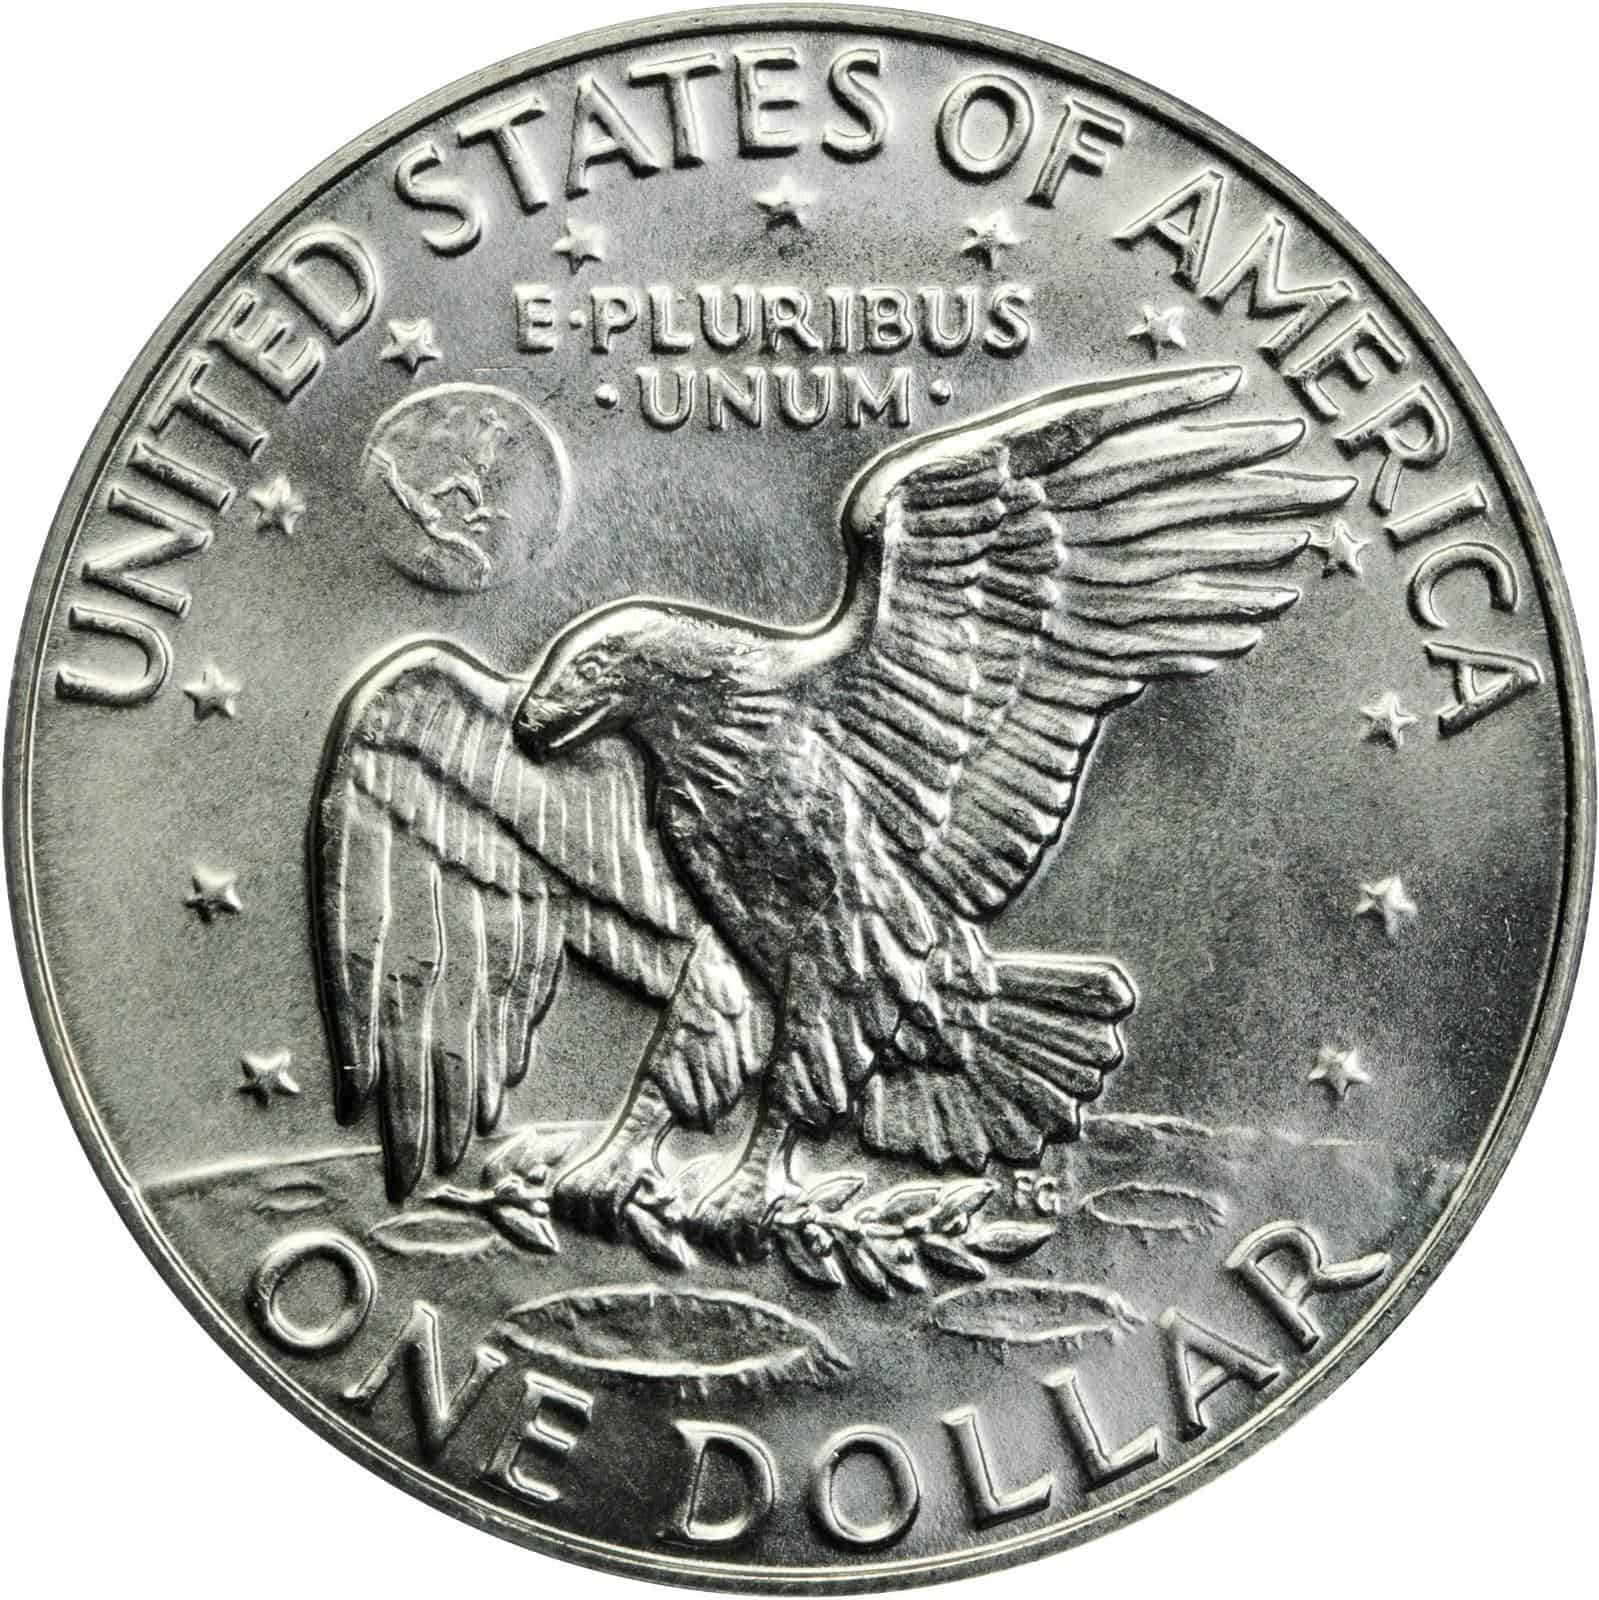 The reverse of the 1974 Eisenhower dollar